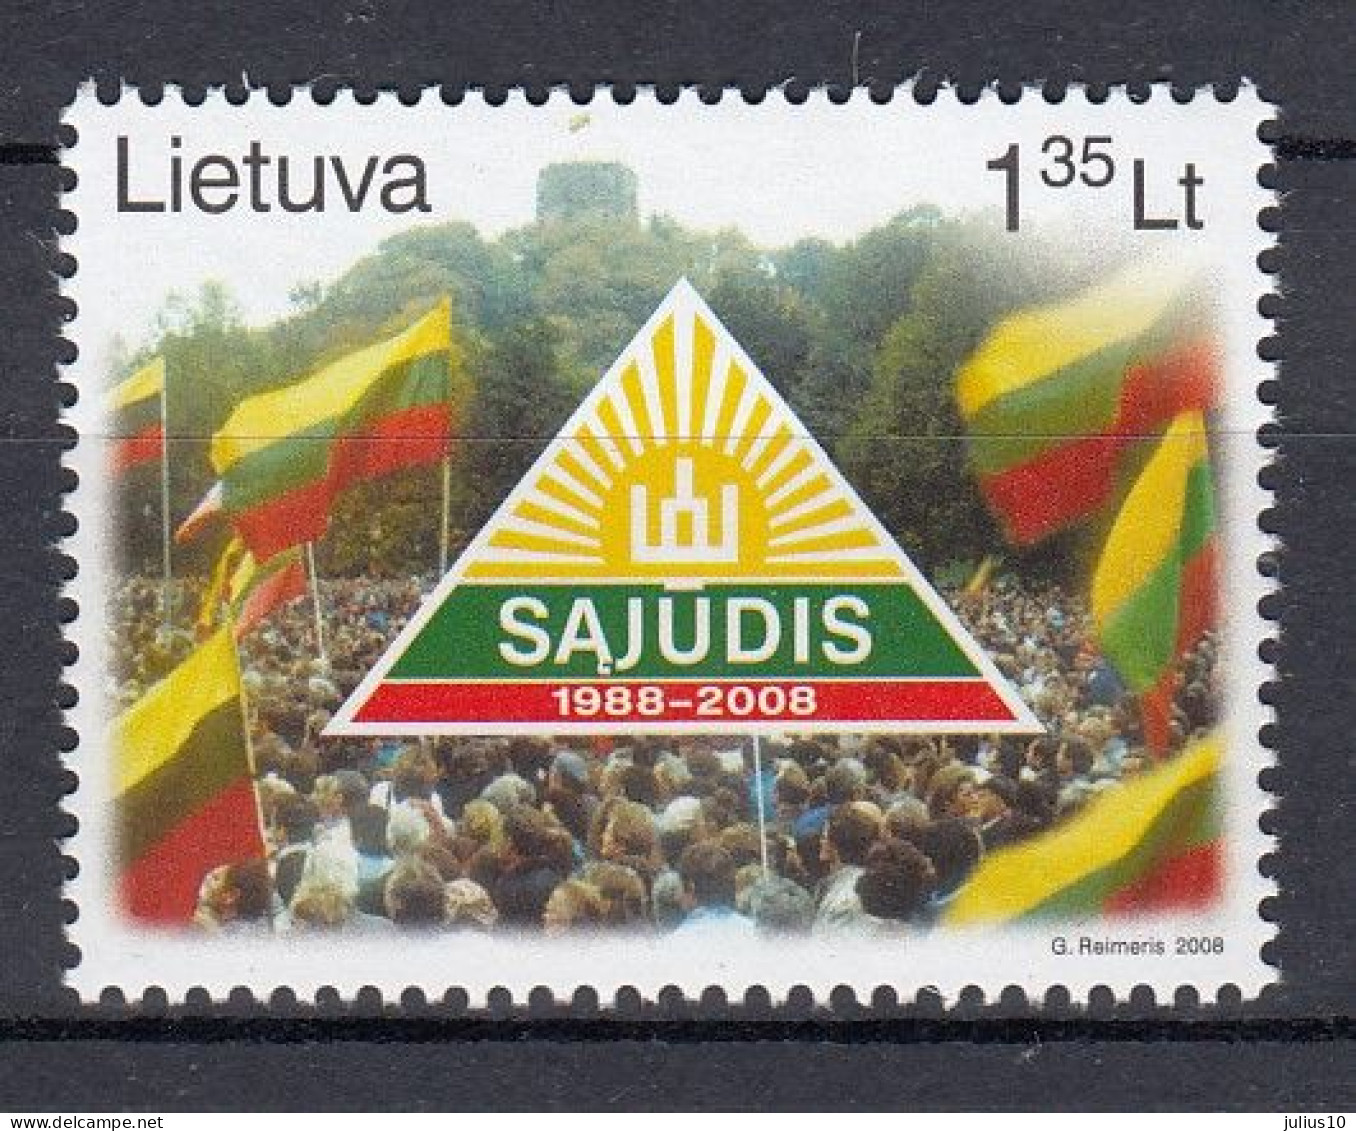 LITHUANIA 2008 Sajudis Anniversary MNH(**) Mi 972 #Lt940 - Lituanie